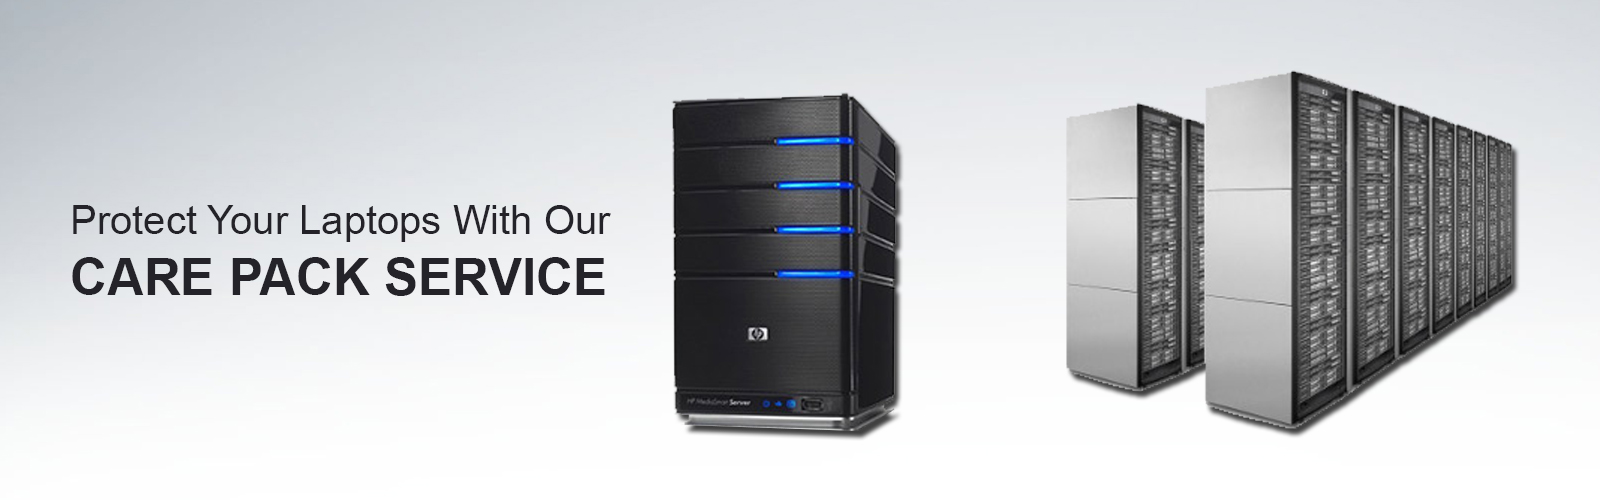 HP Servers Care Pack Delhi